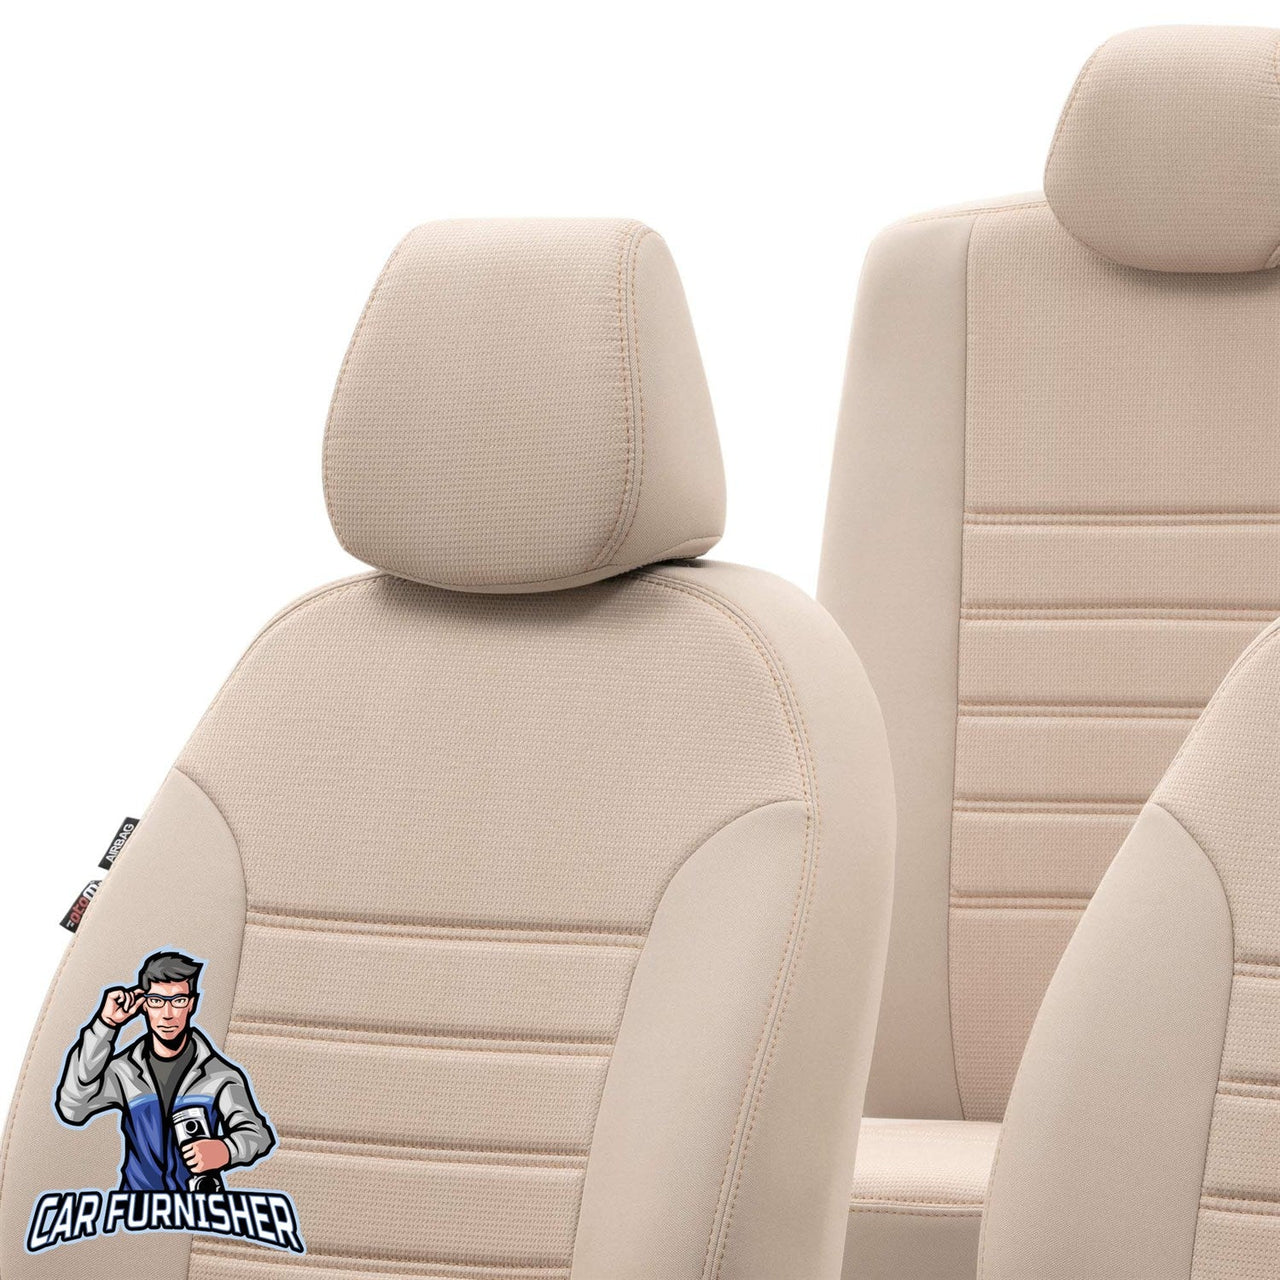 Volkswagen Caddy Seat Cover Original Jacquard Design Beige Jacquard Fabric